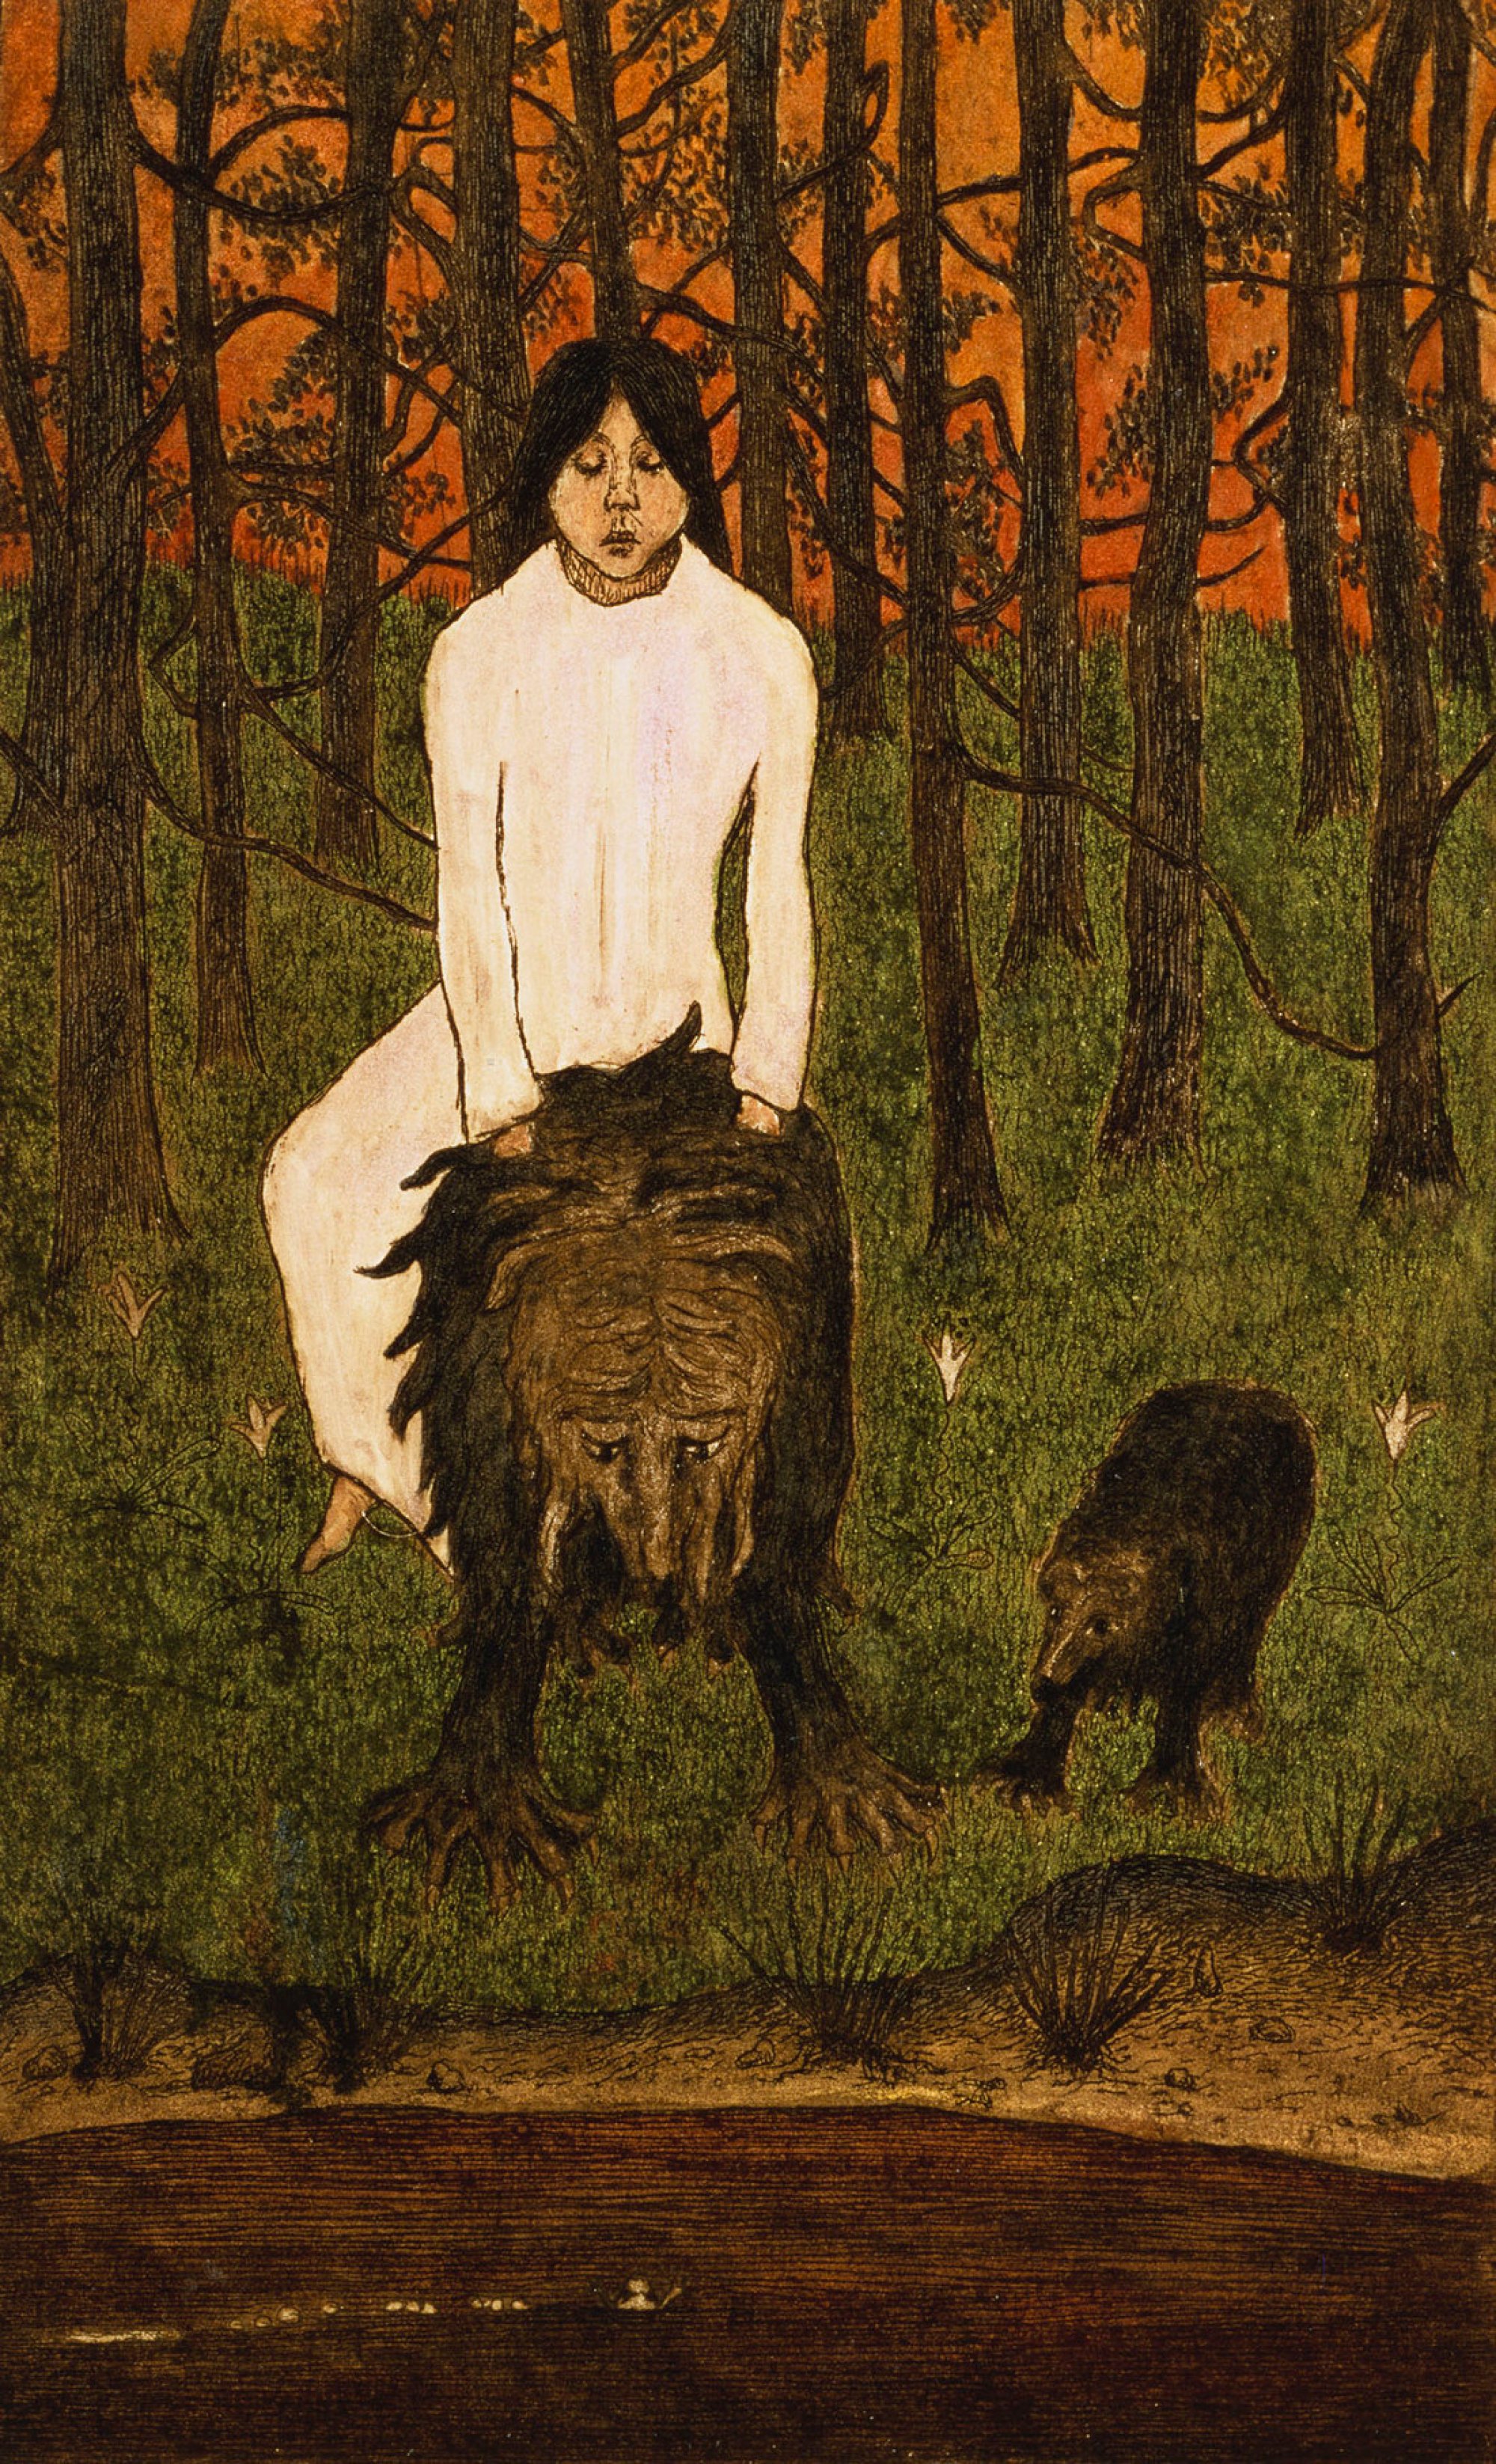 童話故事 by Hugo Simberg - 1898 - 21 x 13 cm 